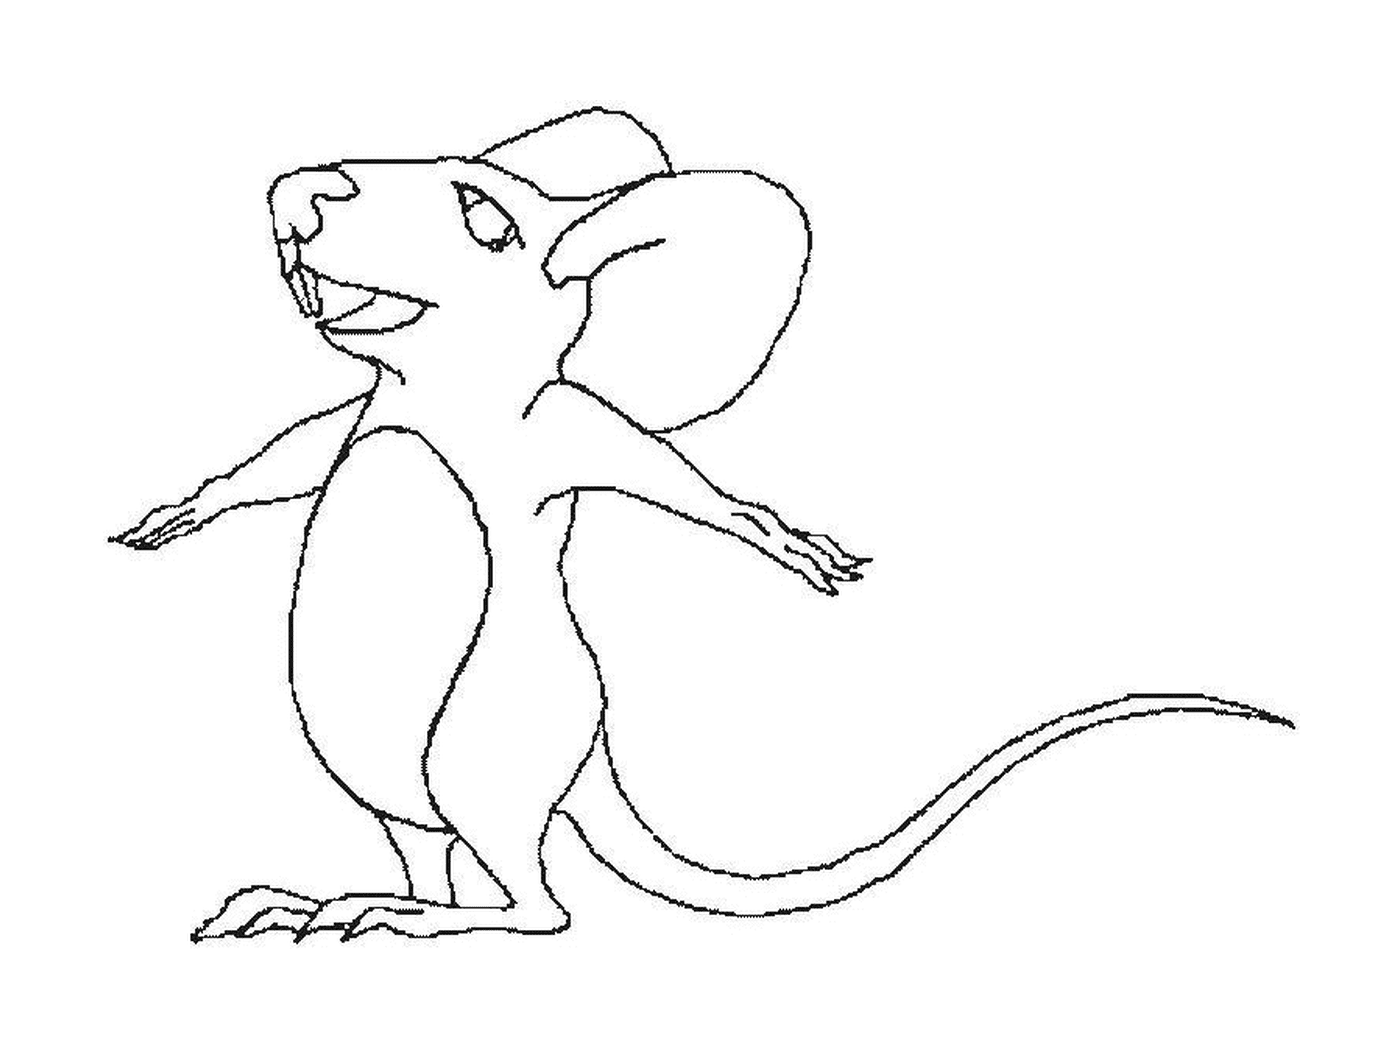  Un ratón con los brazos extendidos 